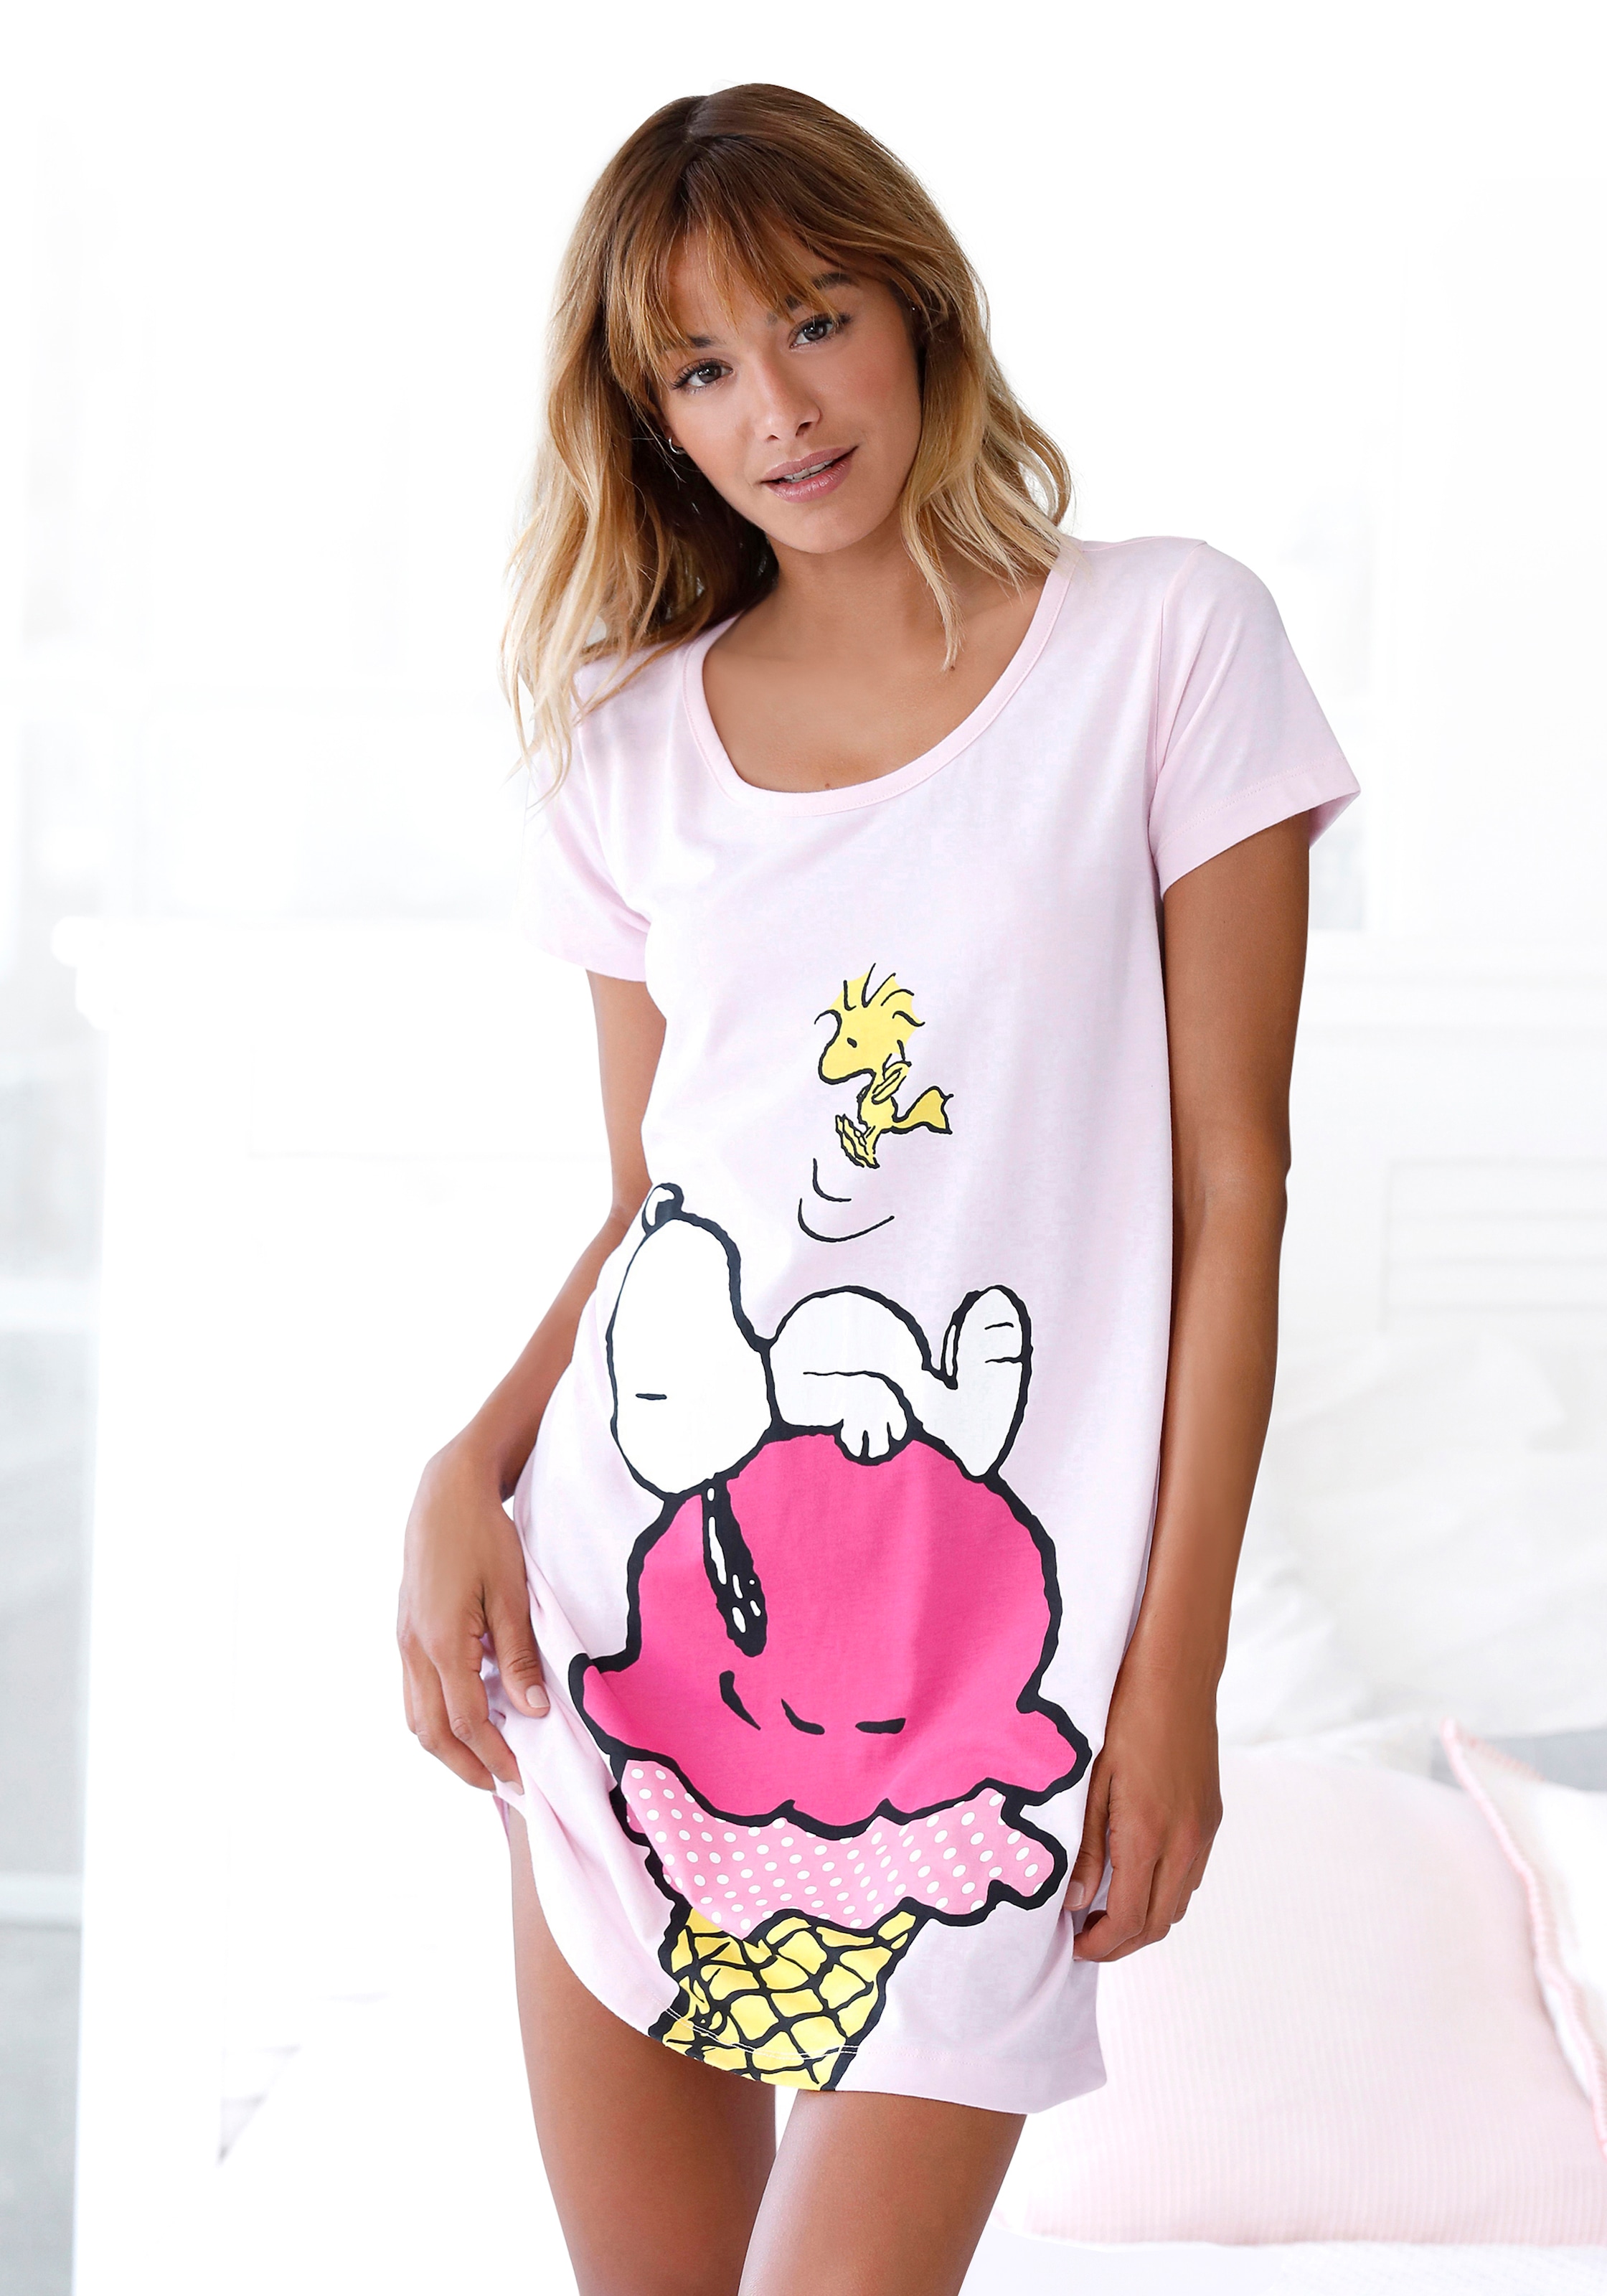 Sleepshirt, mit grossem Snoopy-Motiv